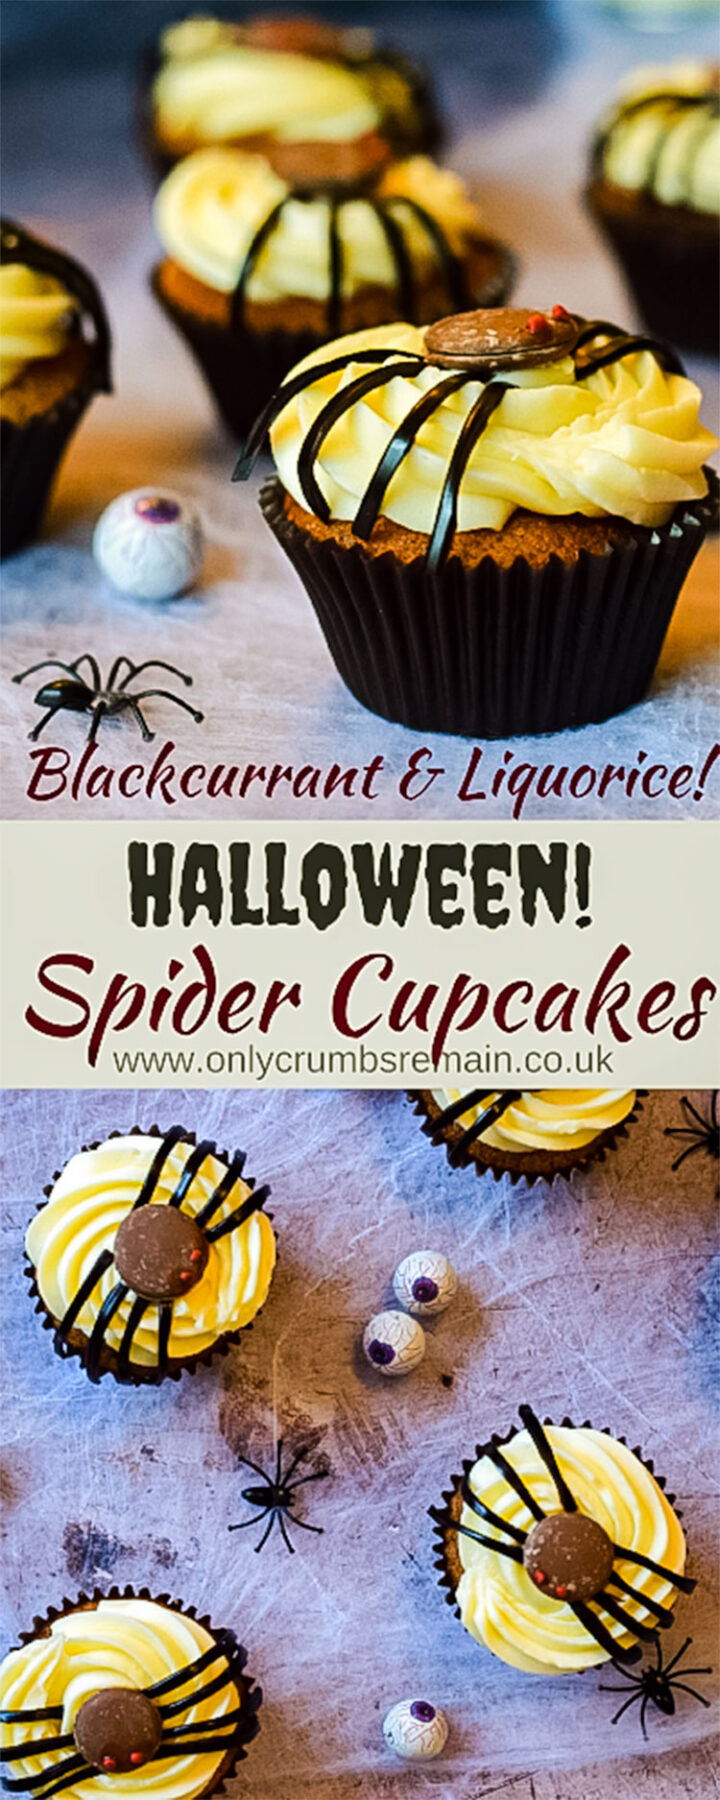 blackcurrant and liquorice spider cupcakes.